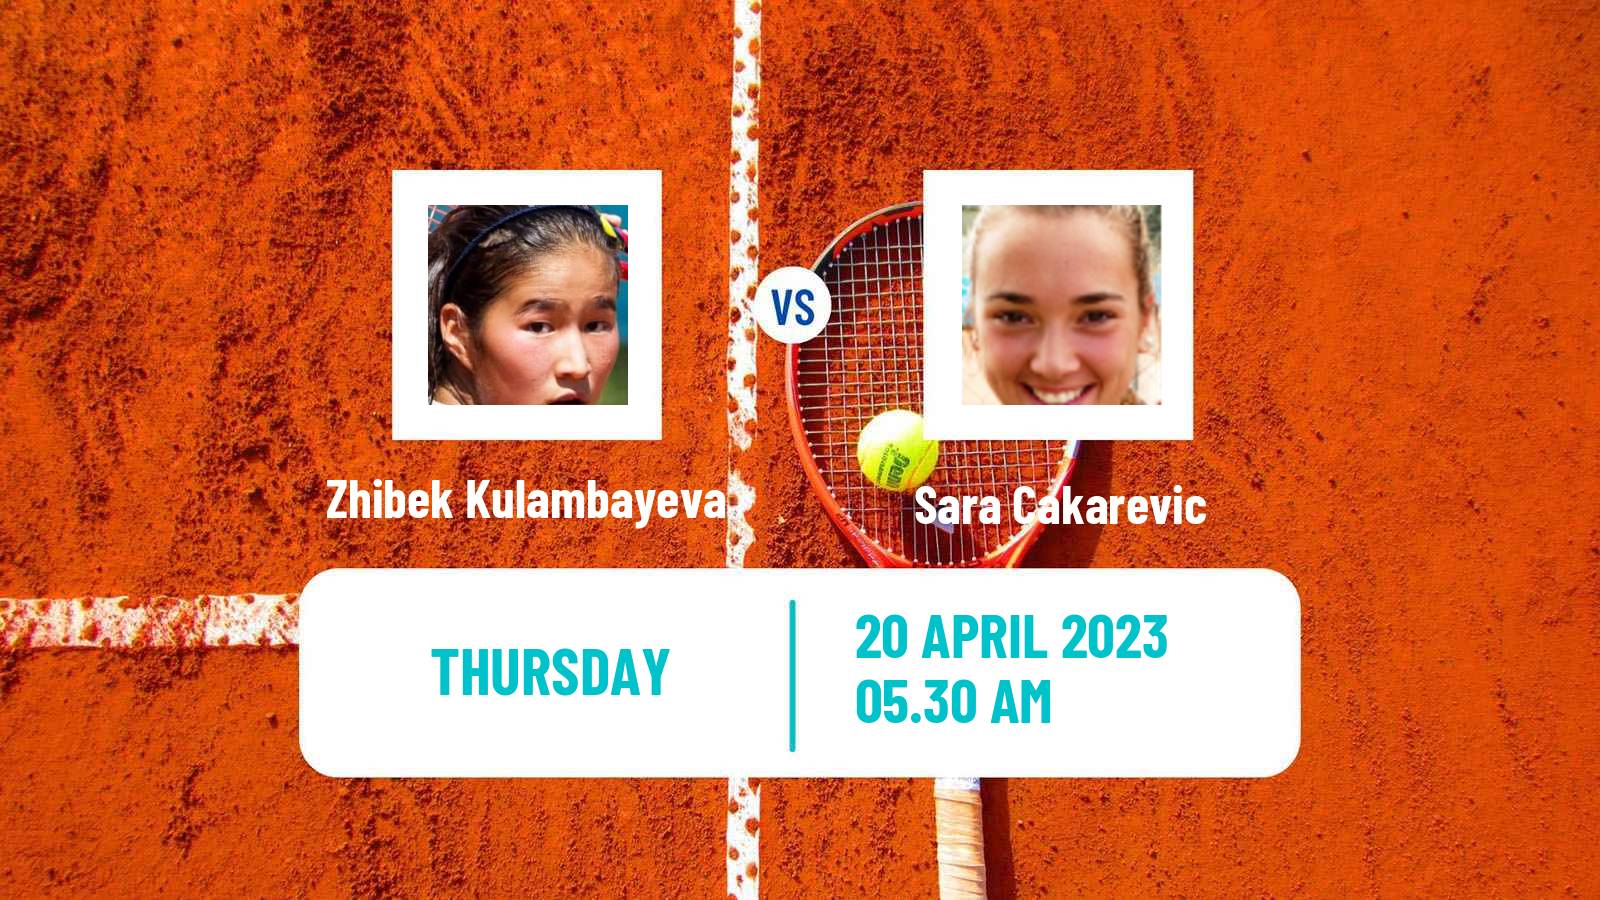 Tennis ITF Tournaments Zhibek Kulambayeva - Sara Cakarevic